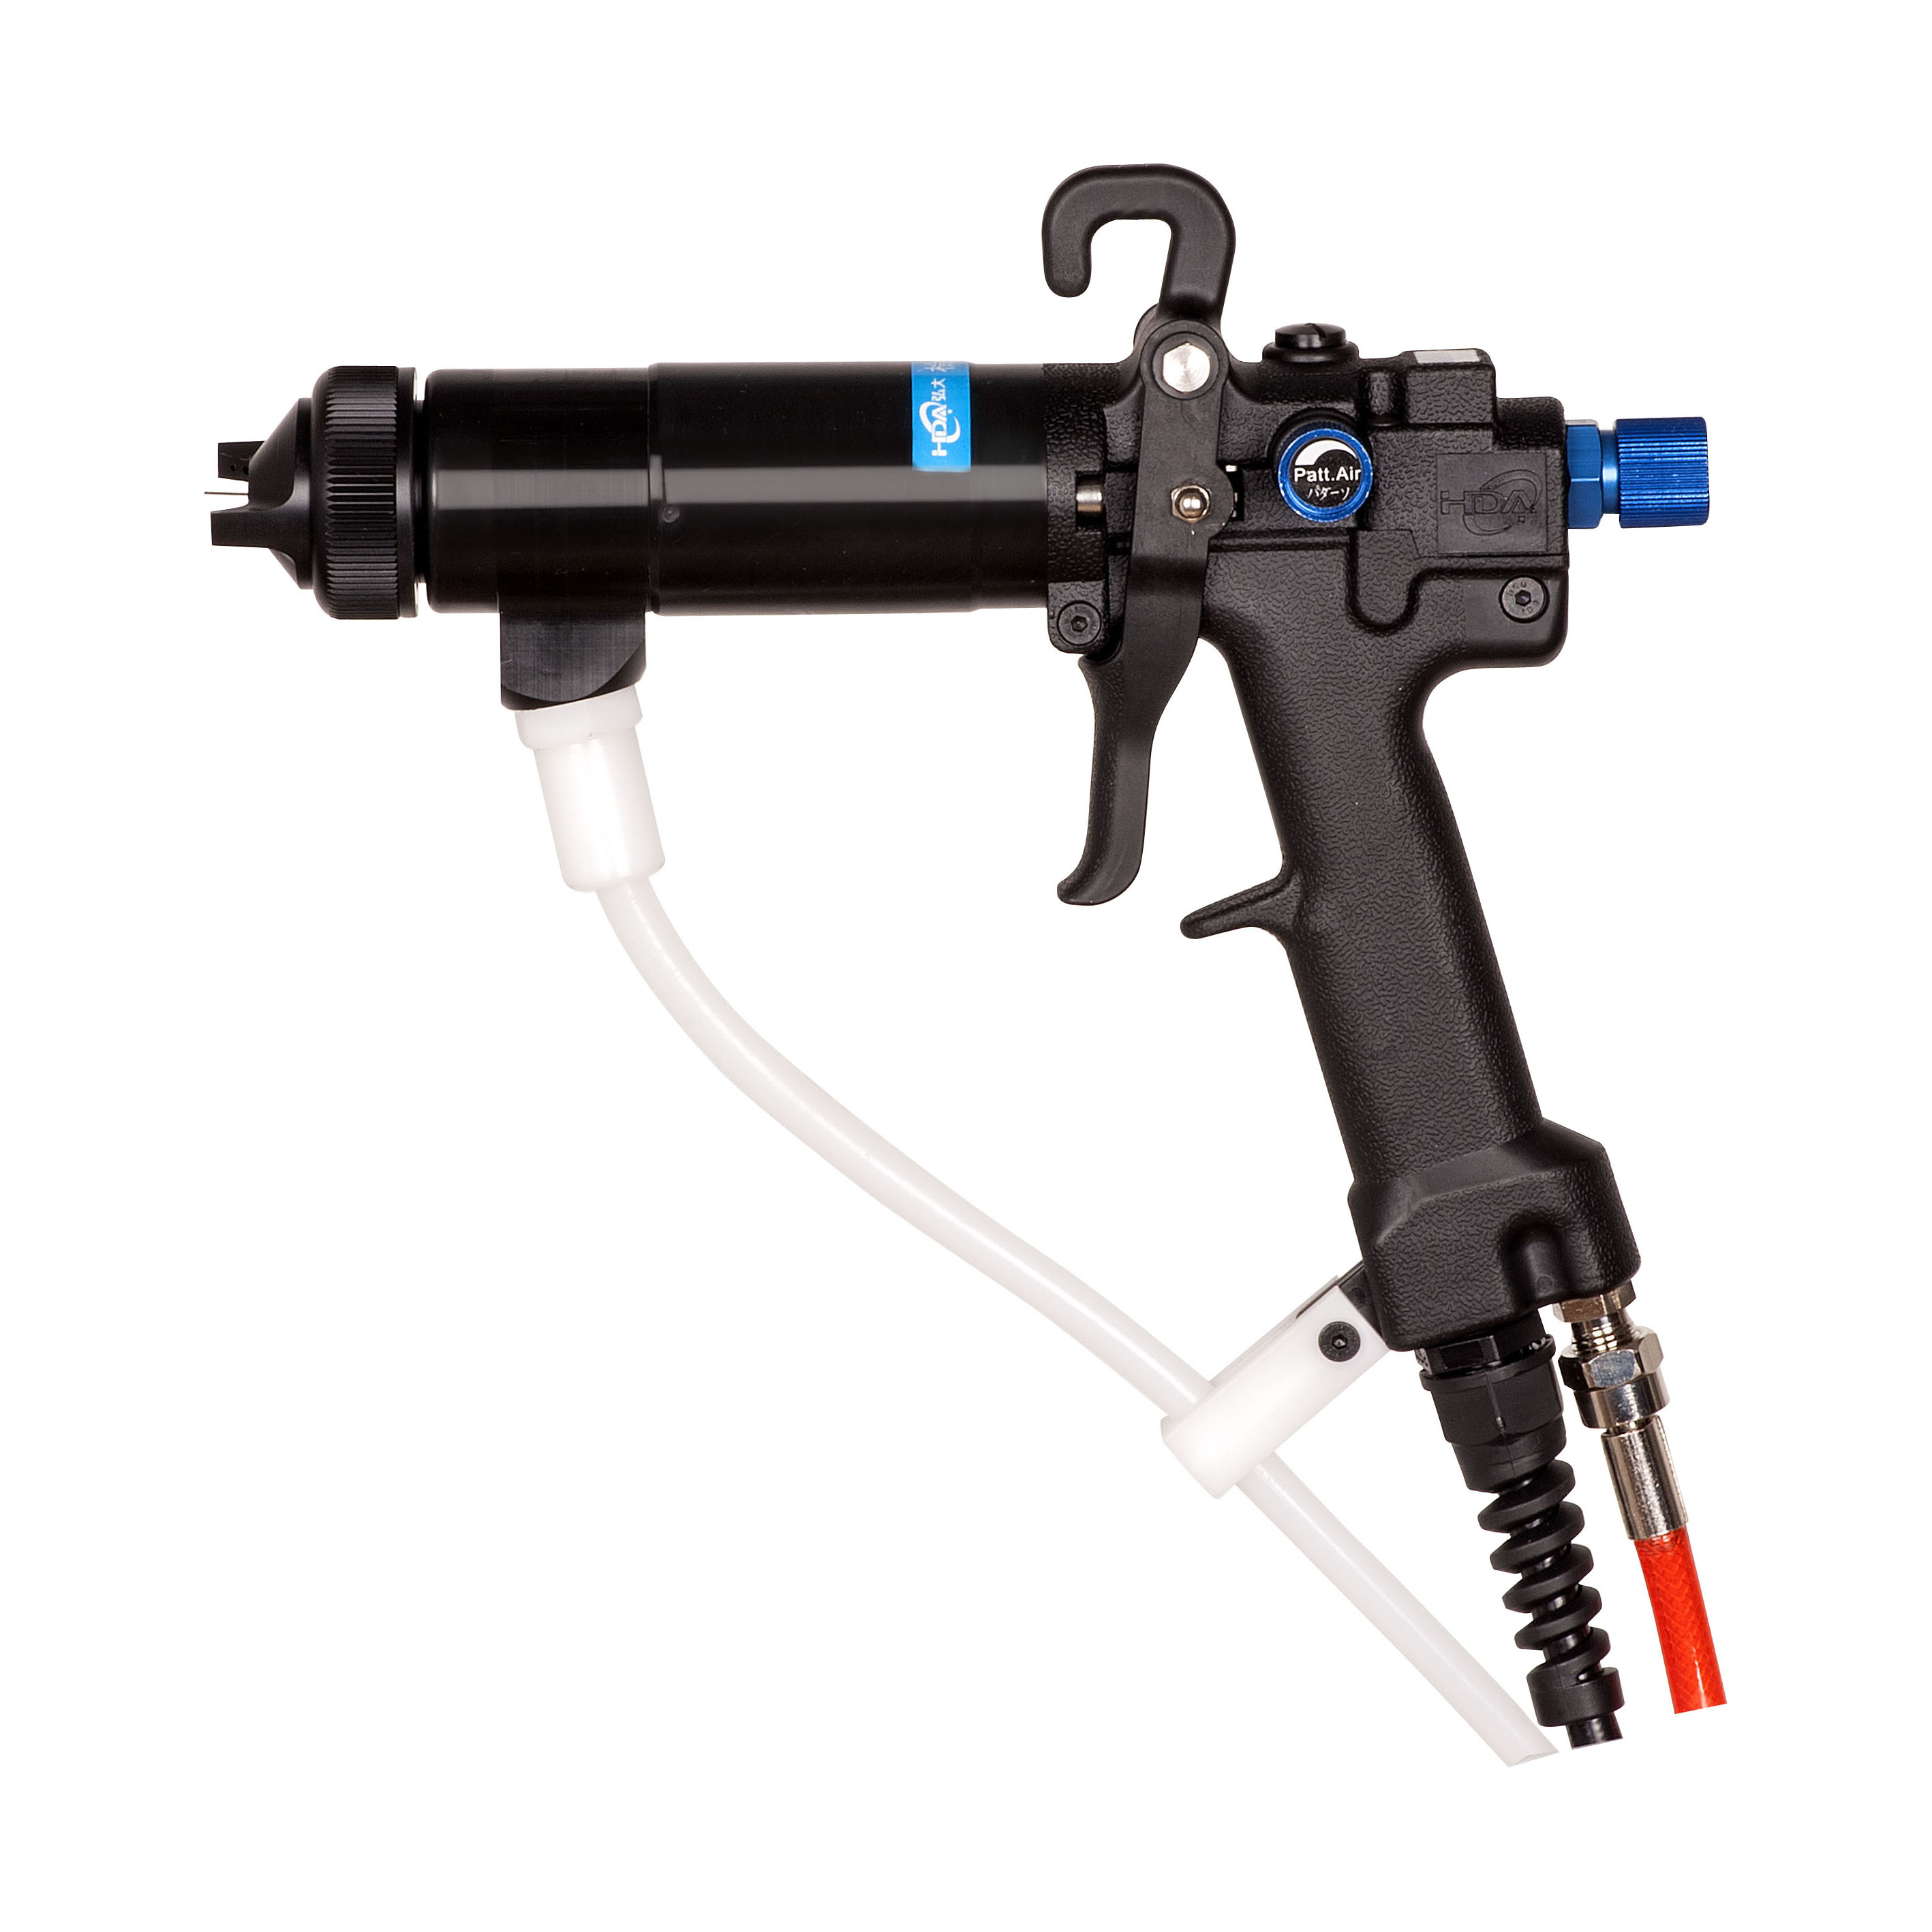 HDA-100 Manual electrostatic spray gun hda-sl01@hongdapt.com